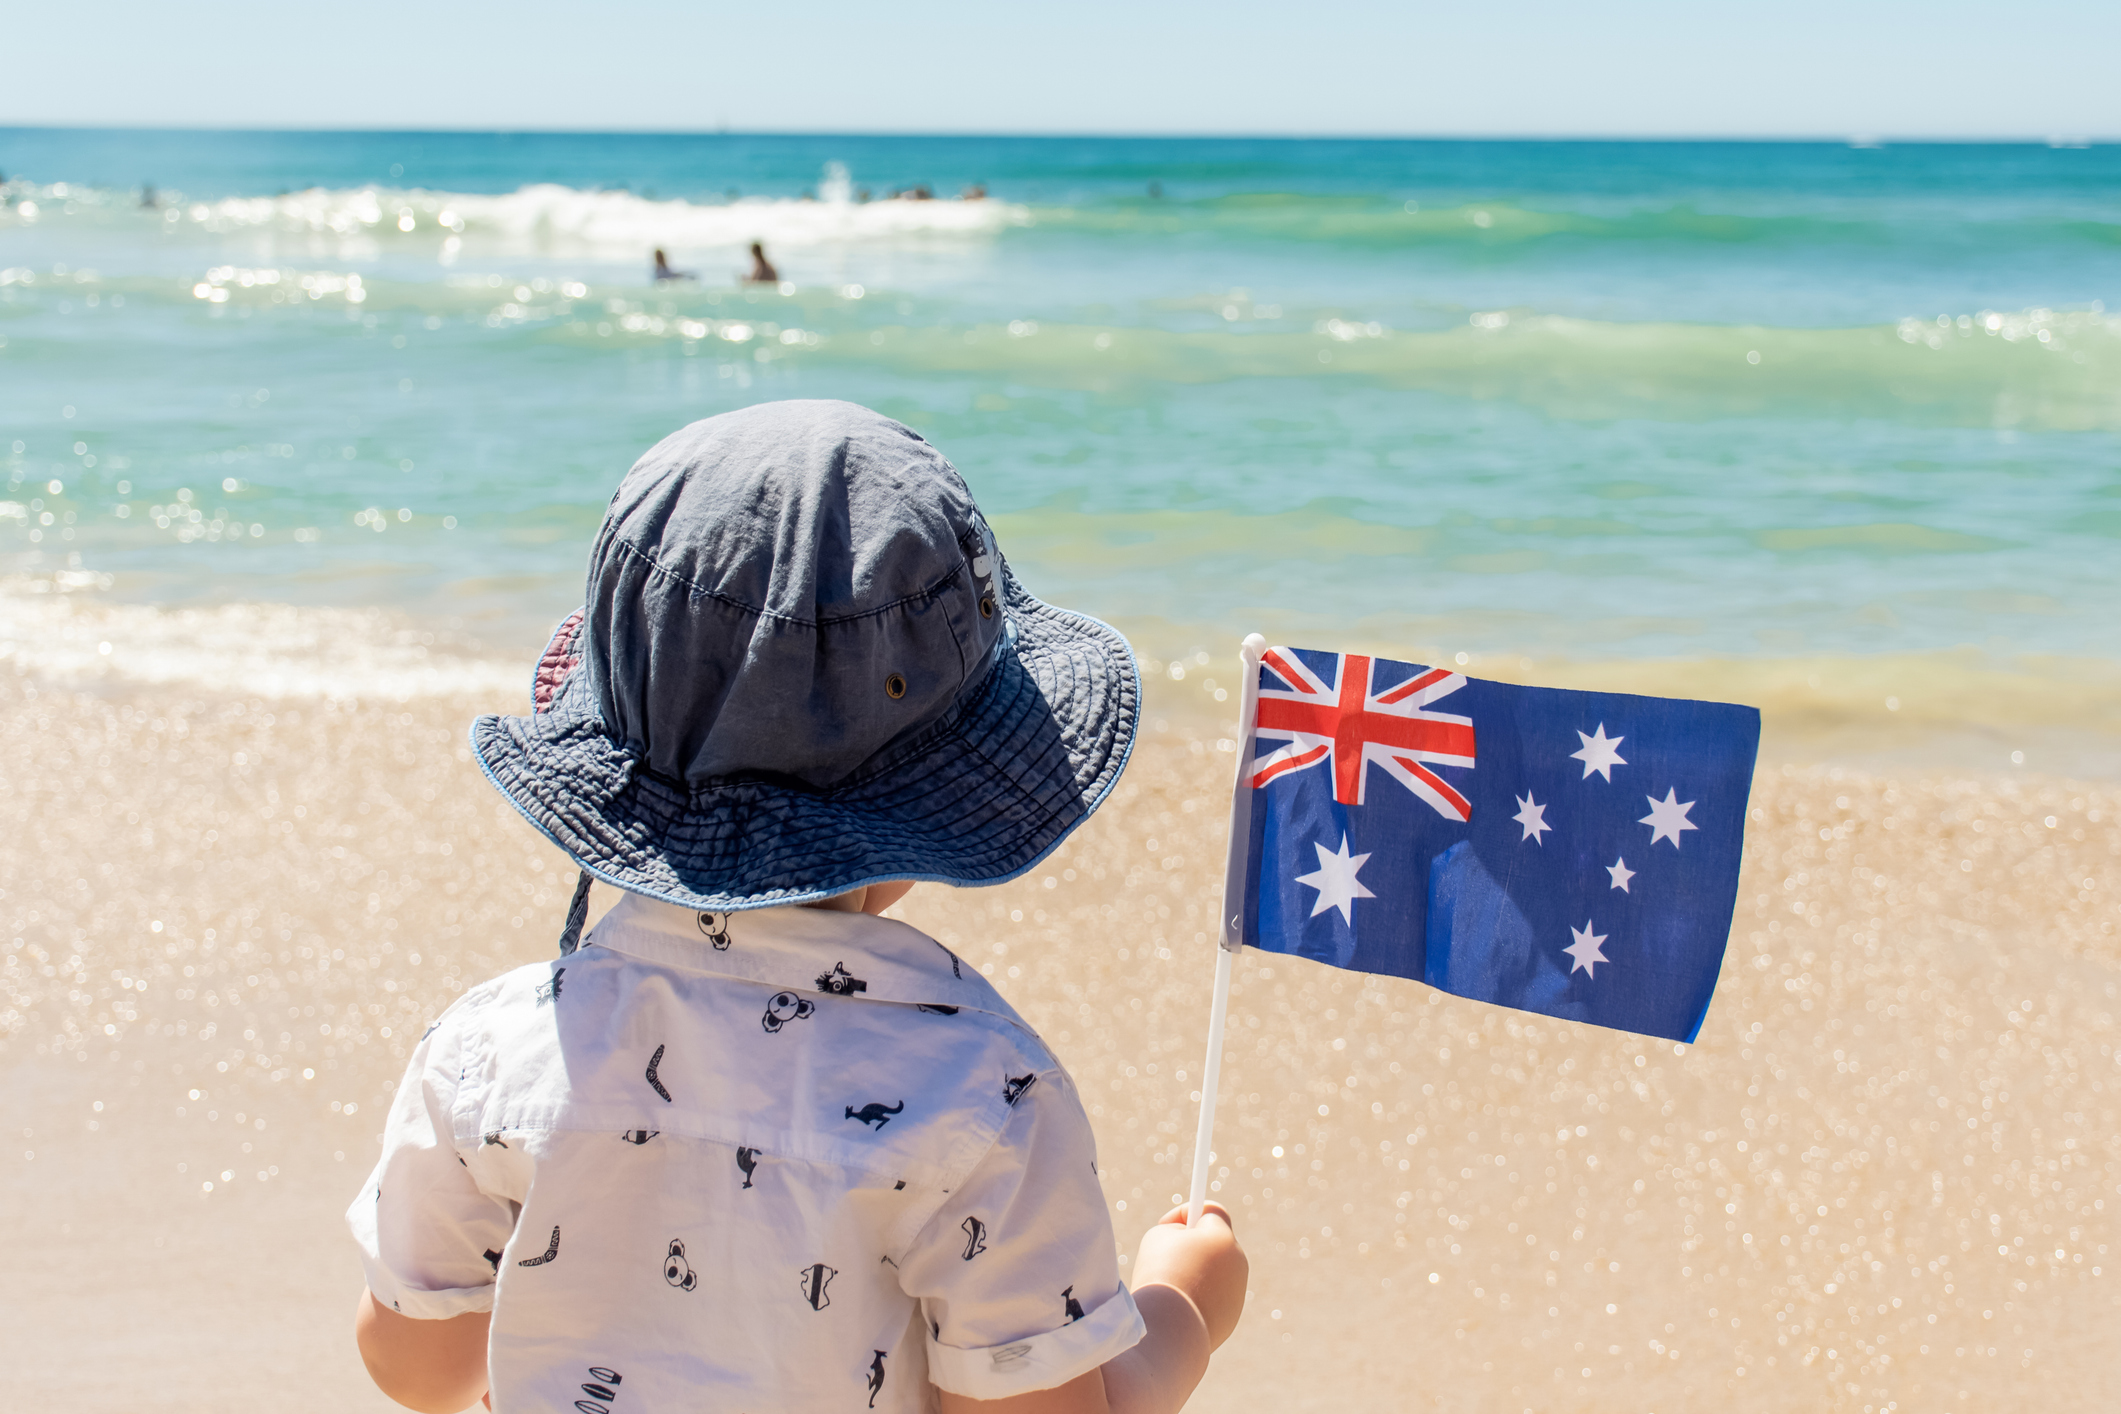 Little boy wearing hat holding Australian flag on a sandy ocean beach. Australia Day concept